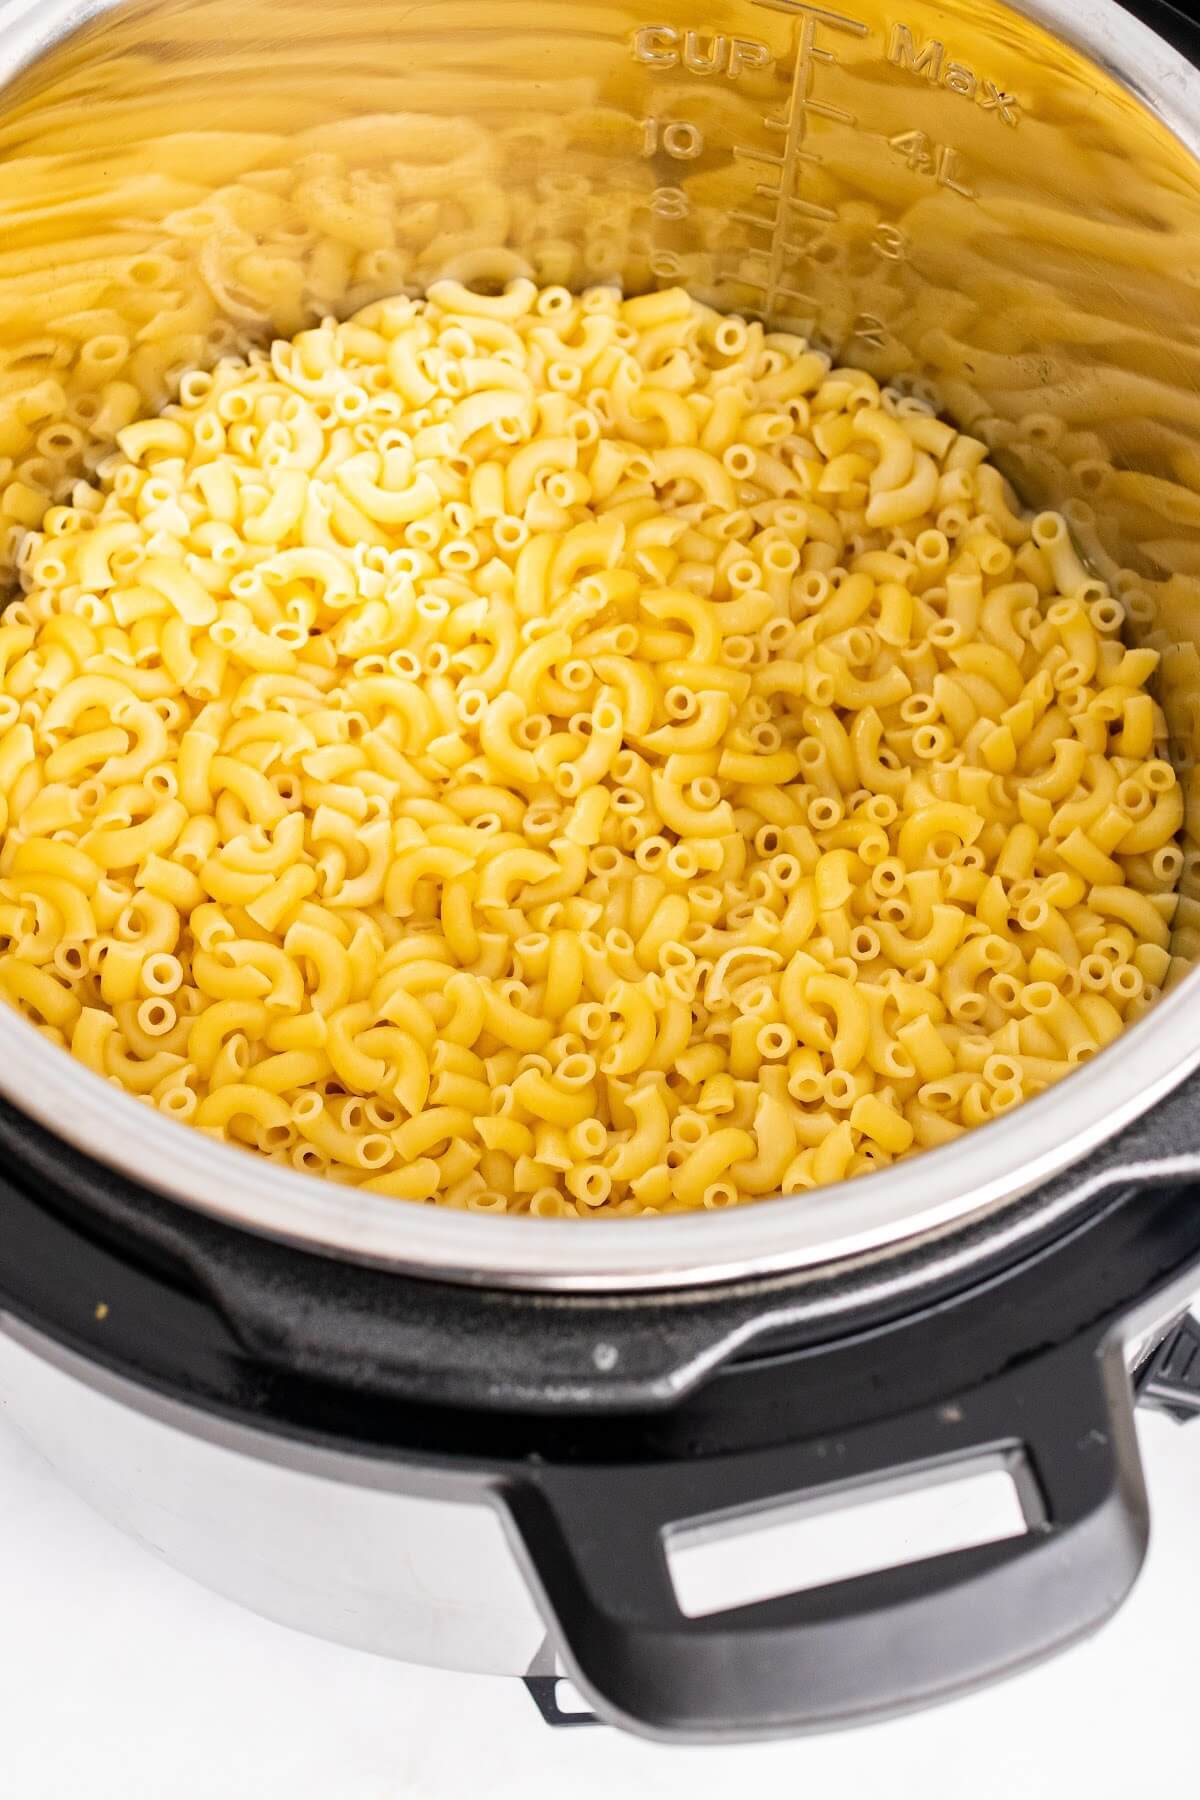 An Instant Pot half full of dry macaroni pasta.